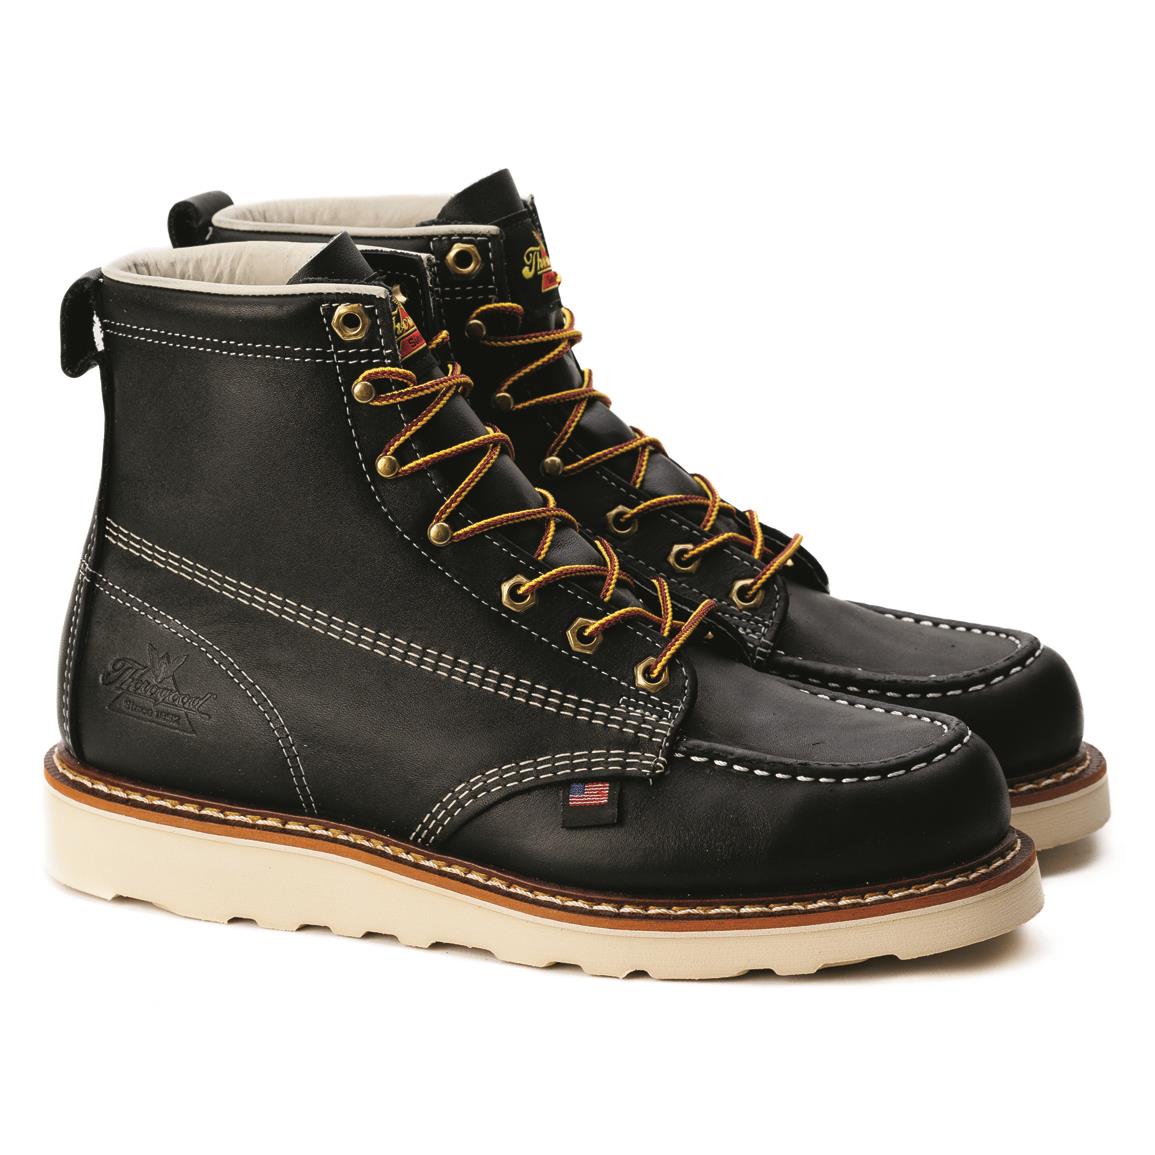 Thorogood American Heritage 6″ Moc Toe Wedge Work Boots, Black